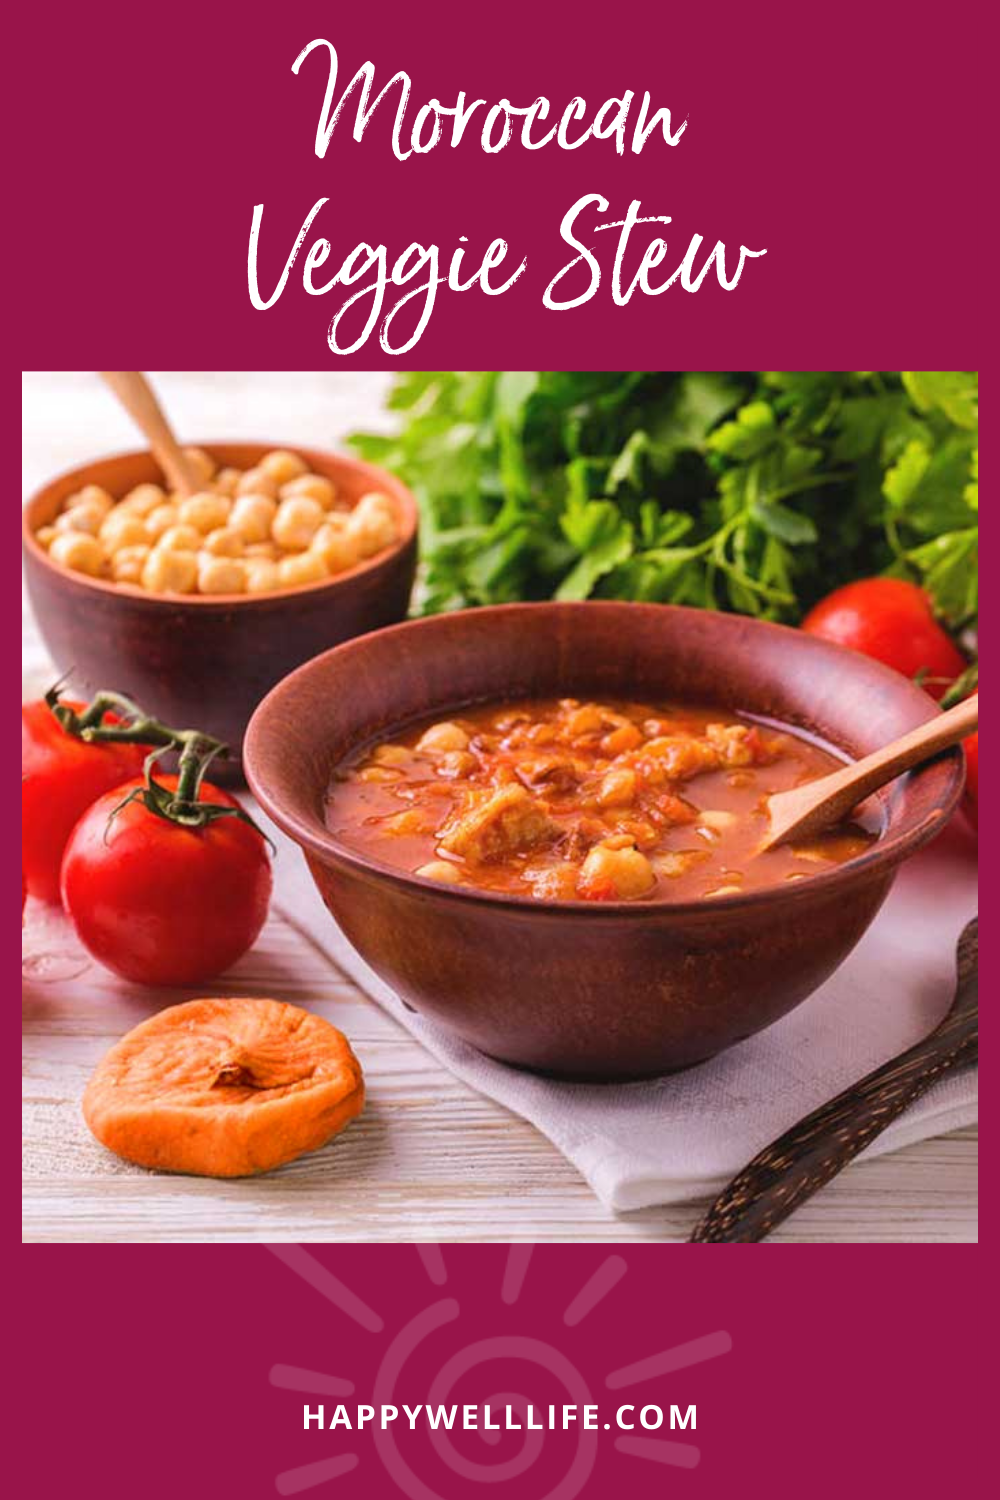 Moroccan Veggie Stew recipe image